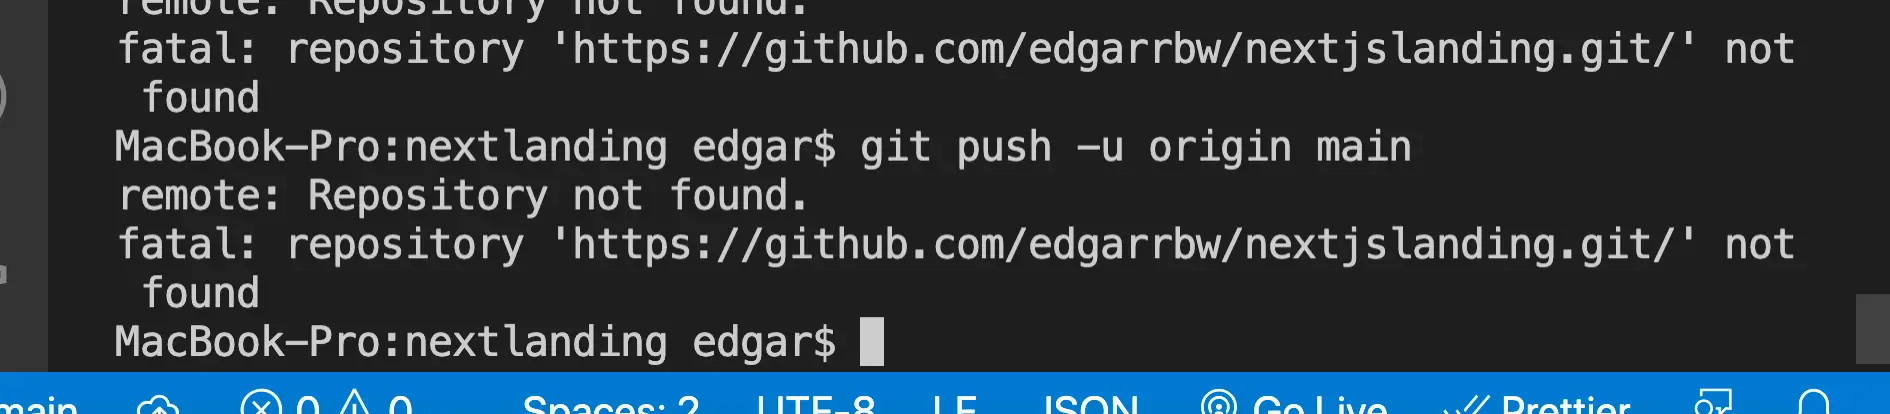 Screenshot of Git Github error: fatal: repository 'https://github.com/user/repo.git/' not found